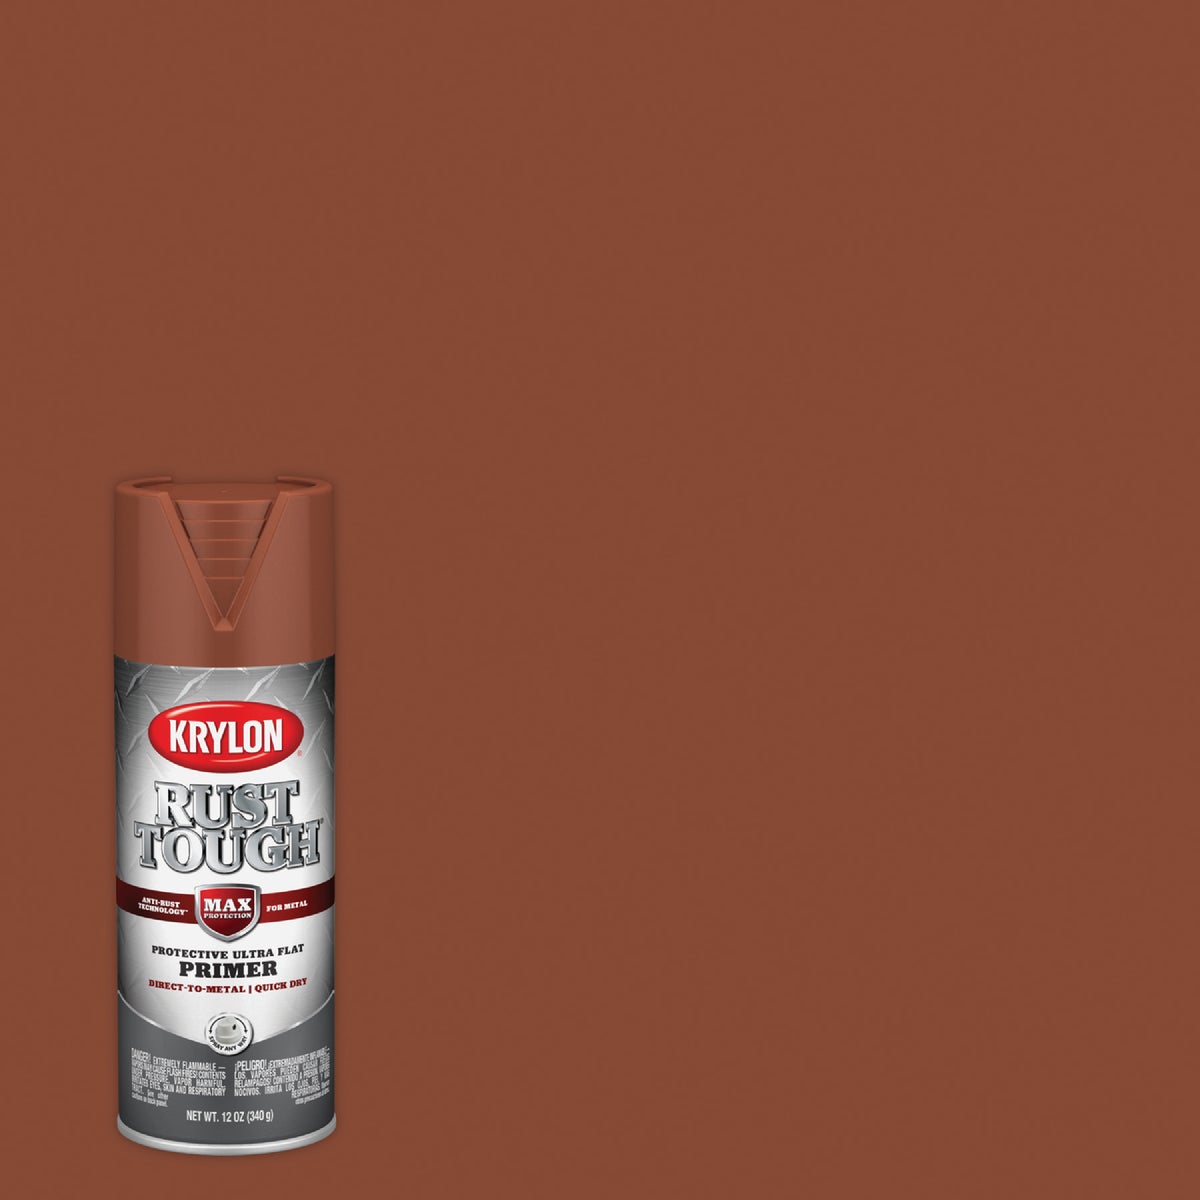 Krylon Rust Tough Red oxide 12 Oz. All-Purpose Spray Paint Primer